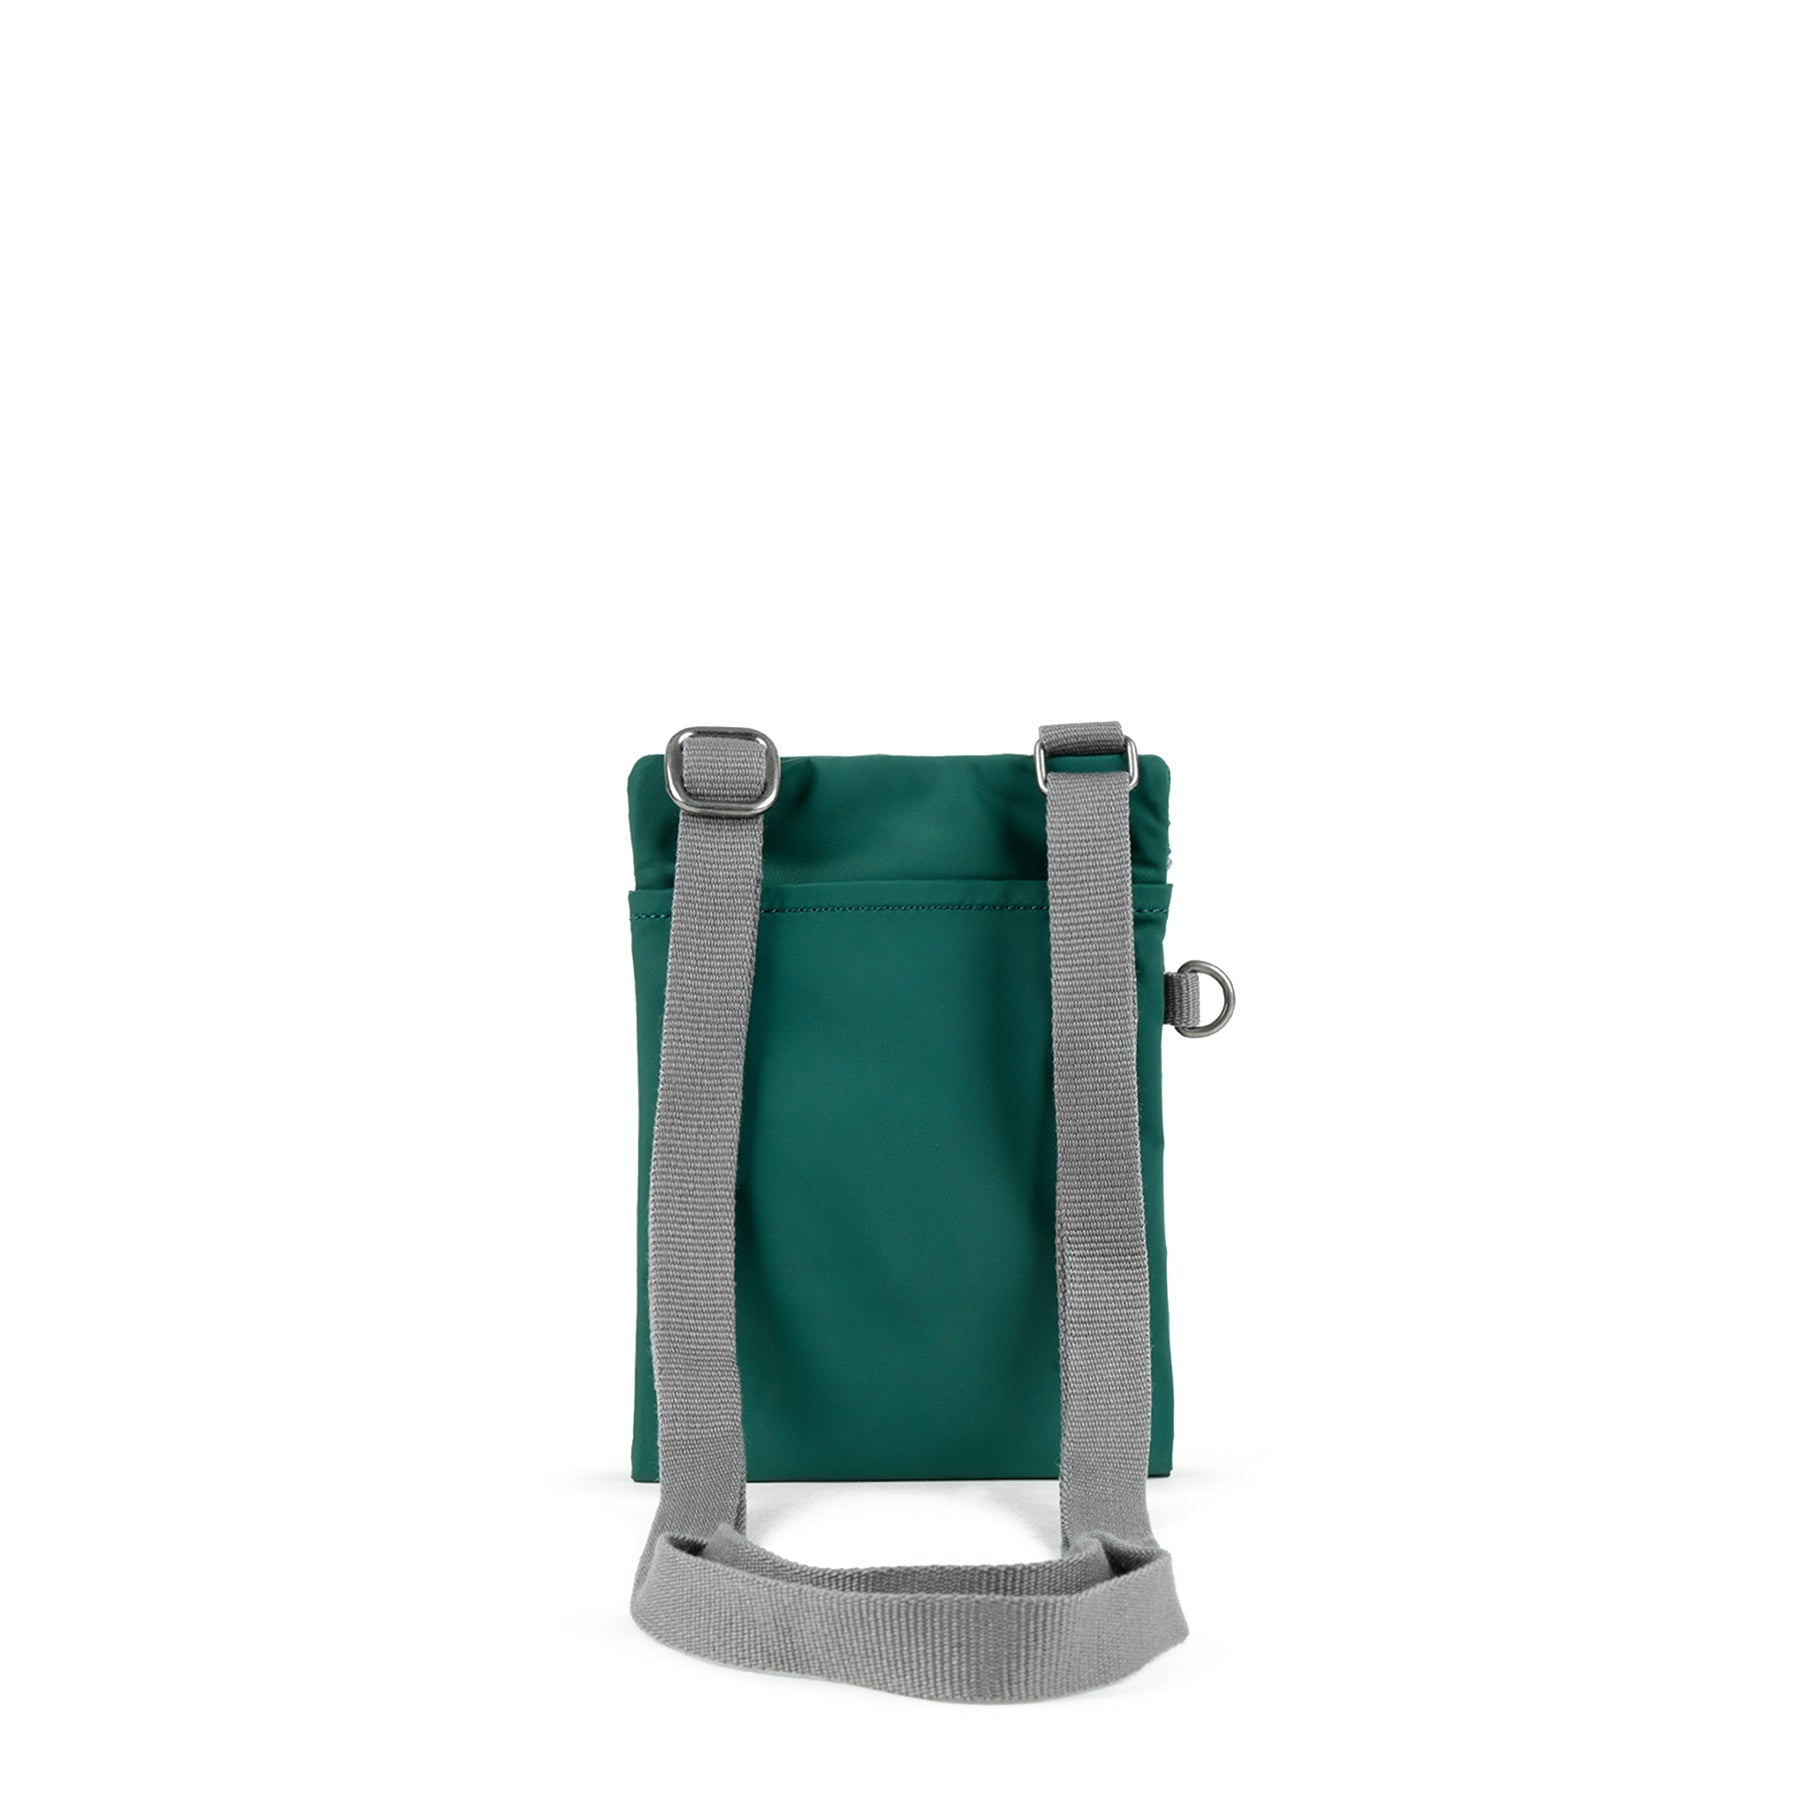 ROKA Chelsea Teal Recycled Nylon Bag - OS